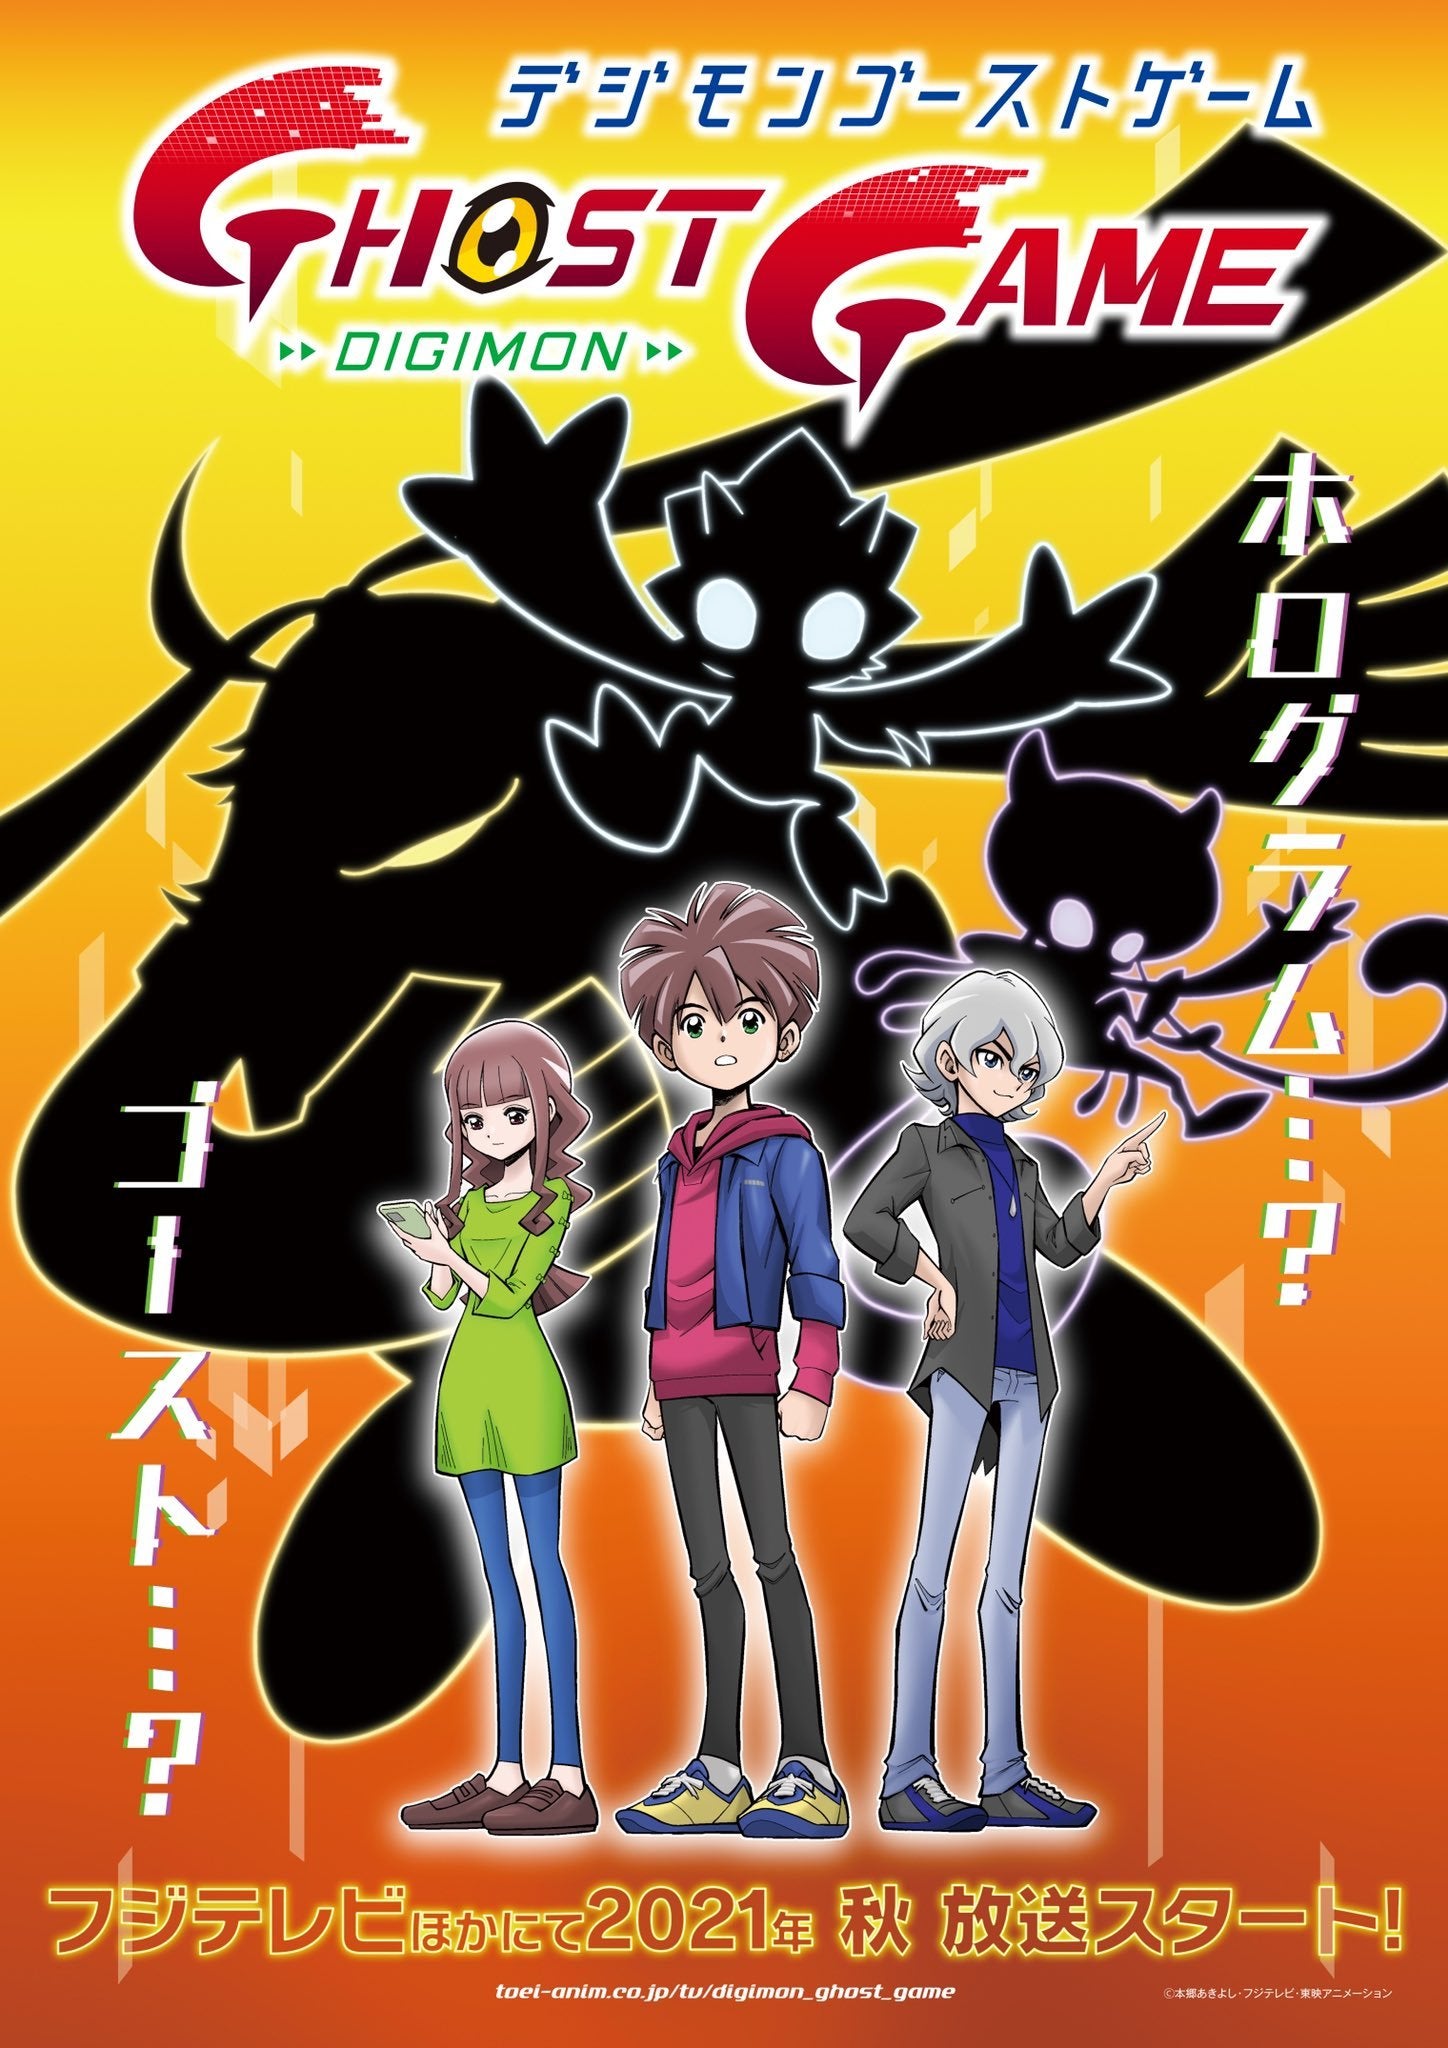 Digimon Adventure 01+02 Vol.1-104 END [English / Japanese Dubbed] Anime DVD  | eBay